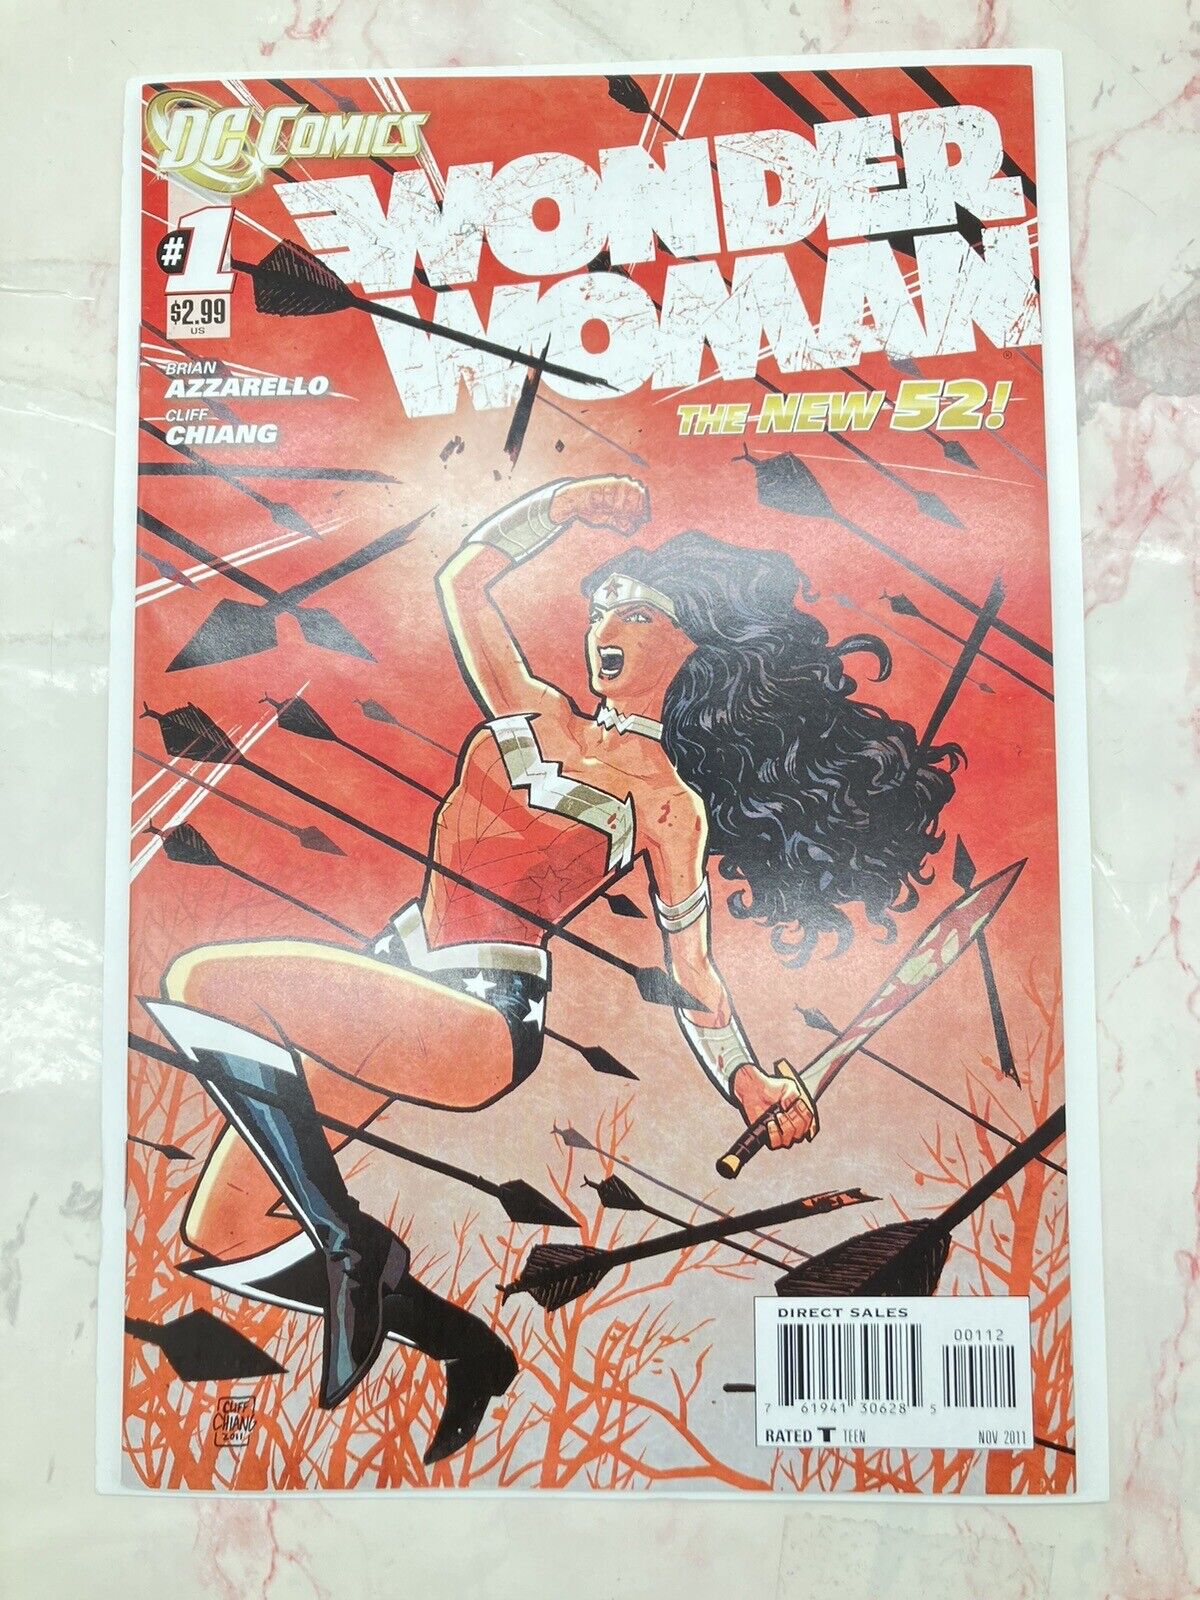 Wonder Woman: New 52 - Issue #1 (2011) DC Comics Azarrello